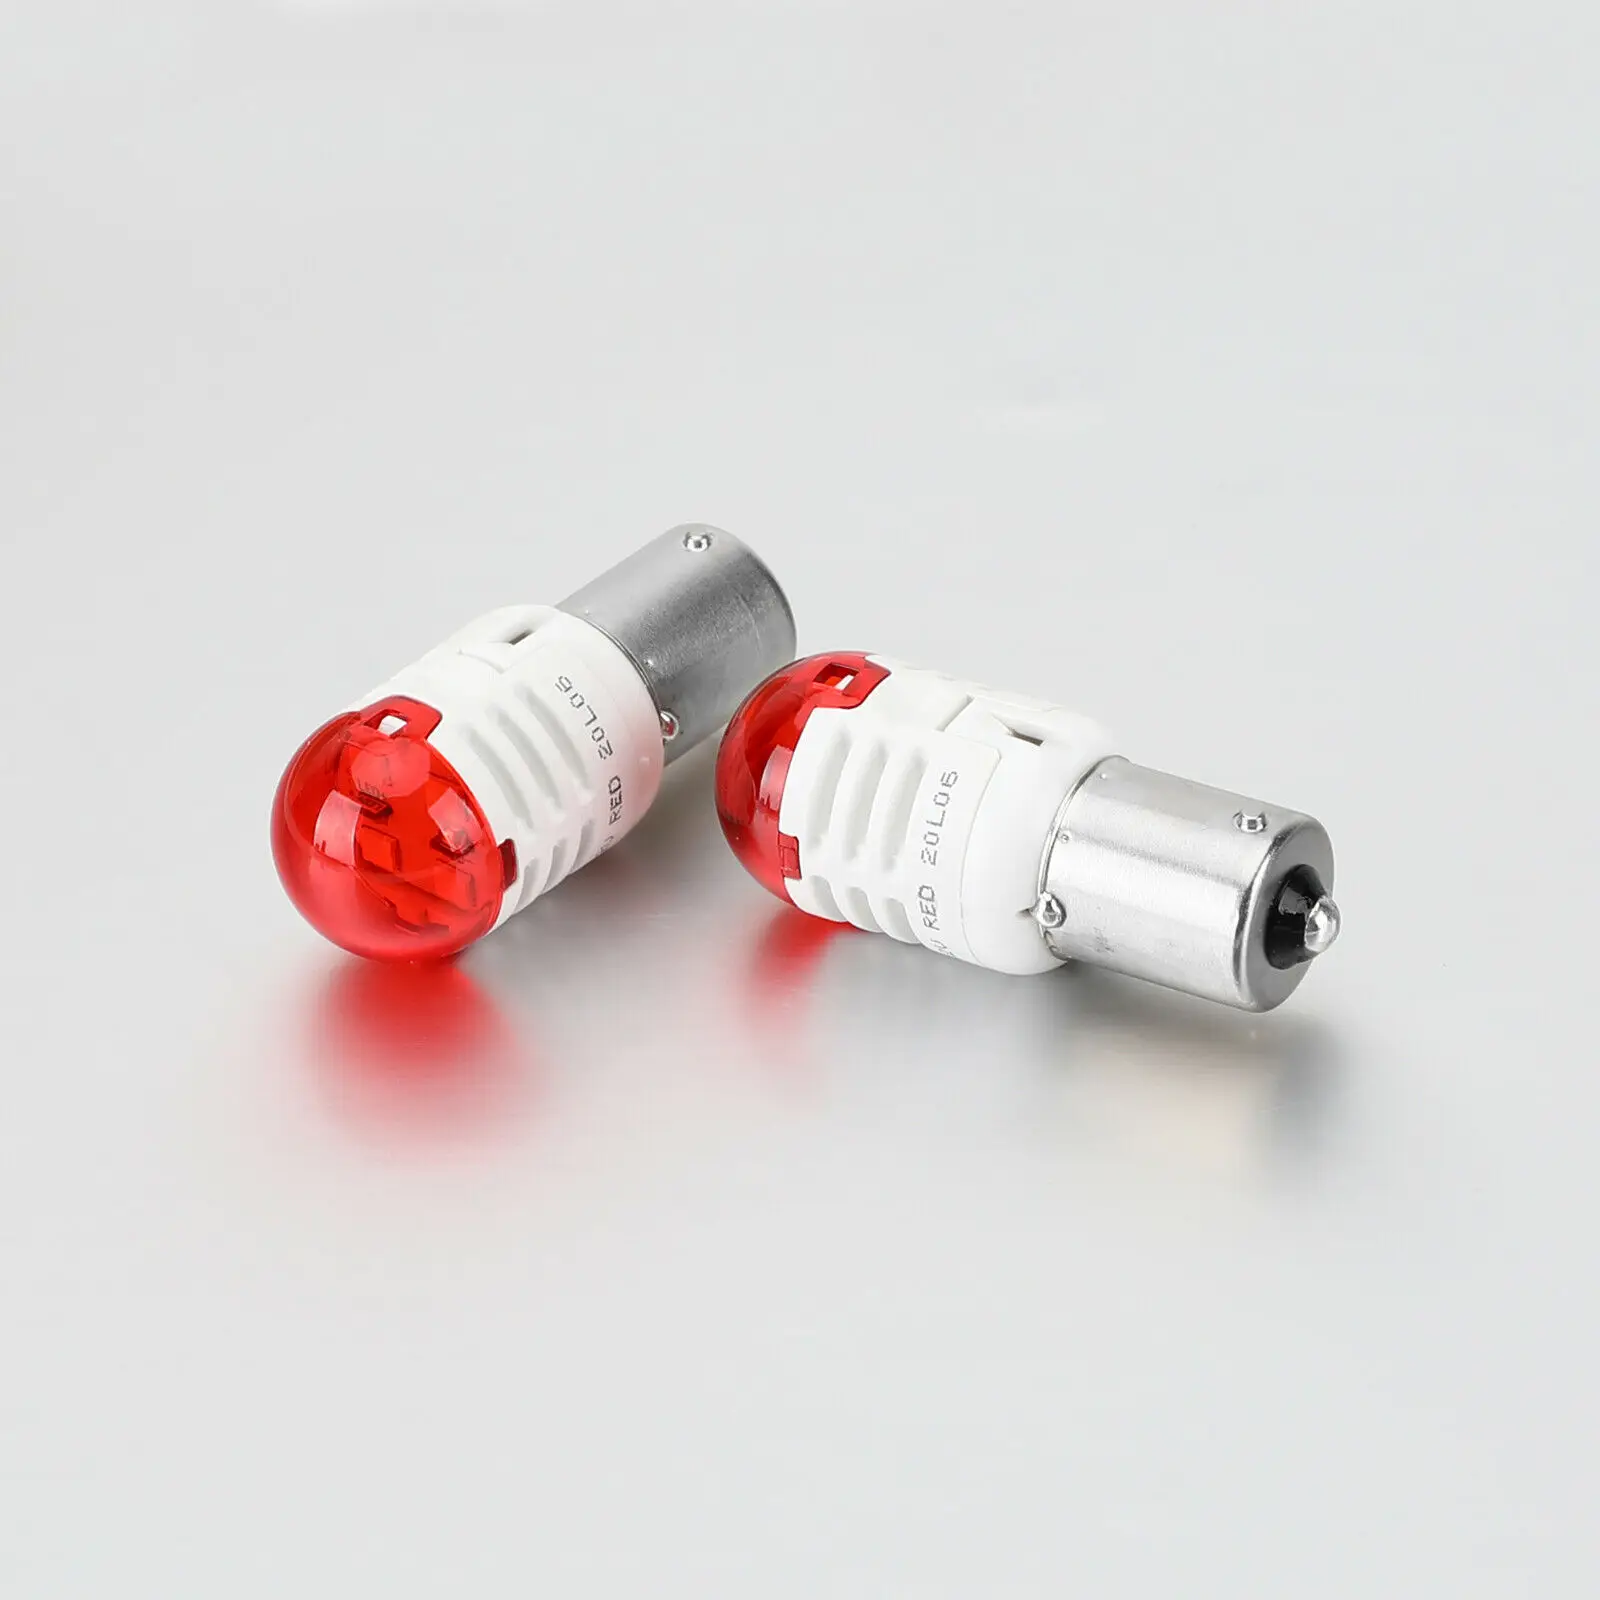 Світодіодна LED лампа Philips P21/5W LED 12/24V X-Treme Ultinon Red 12899RX2